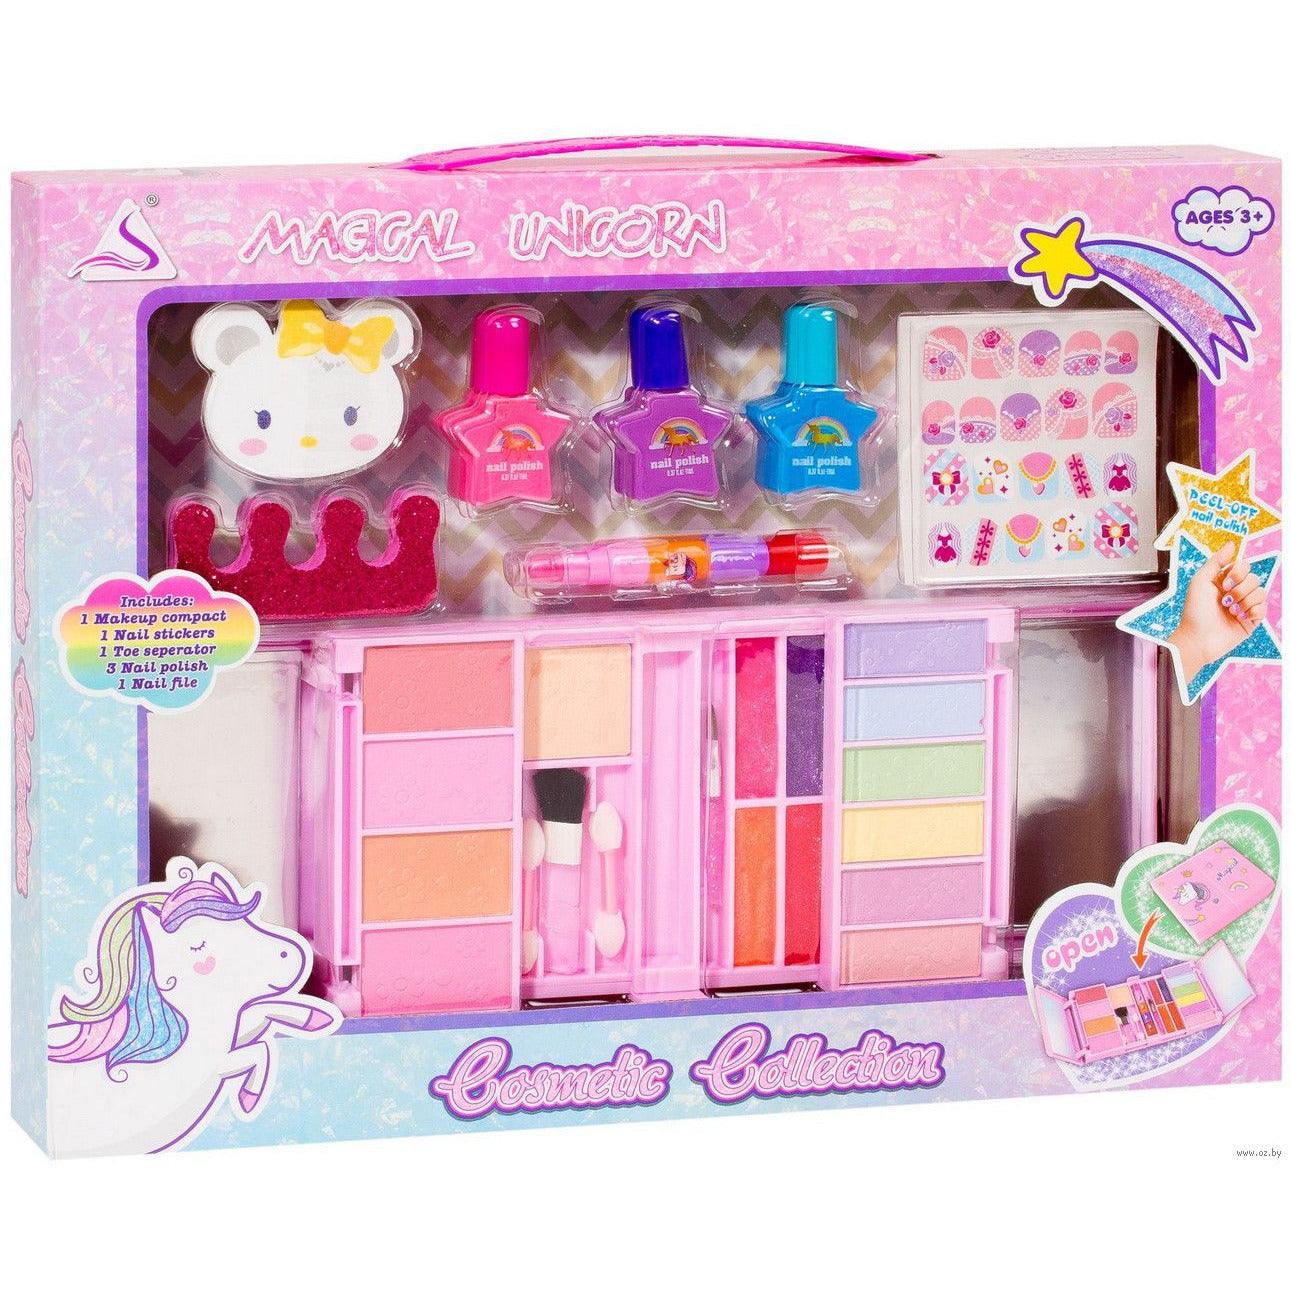 Kaibibi Makeup Set with Unicorn Print for Girls Details - BumbleToys - 5-7 Years, Girls, Makeup, Toy Land, unicorn